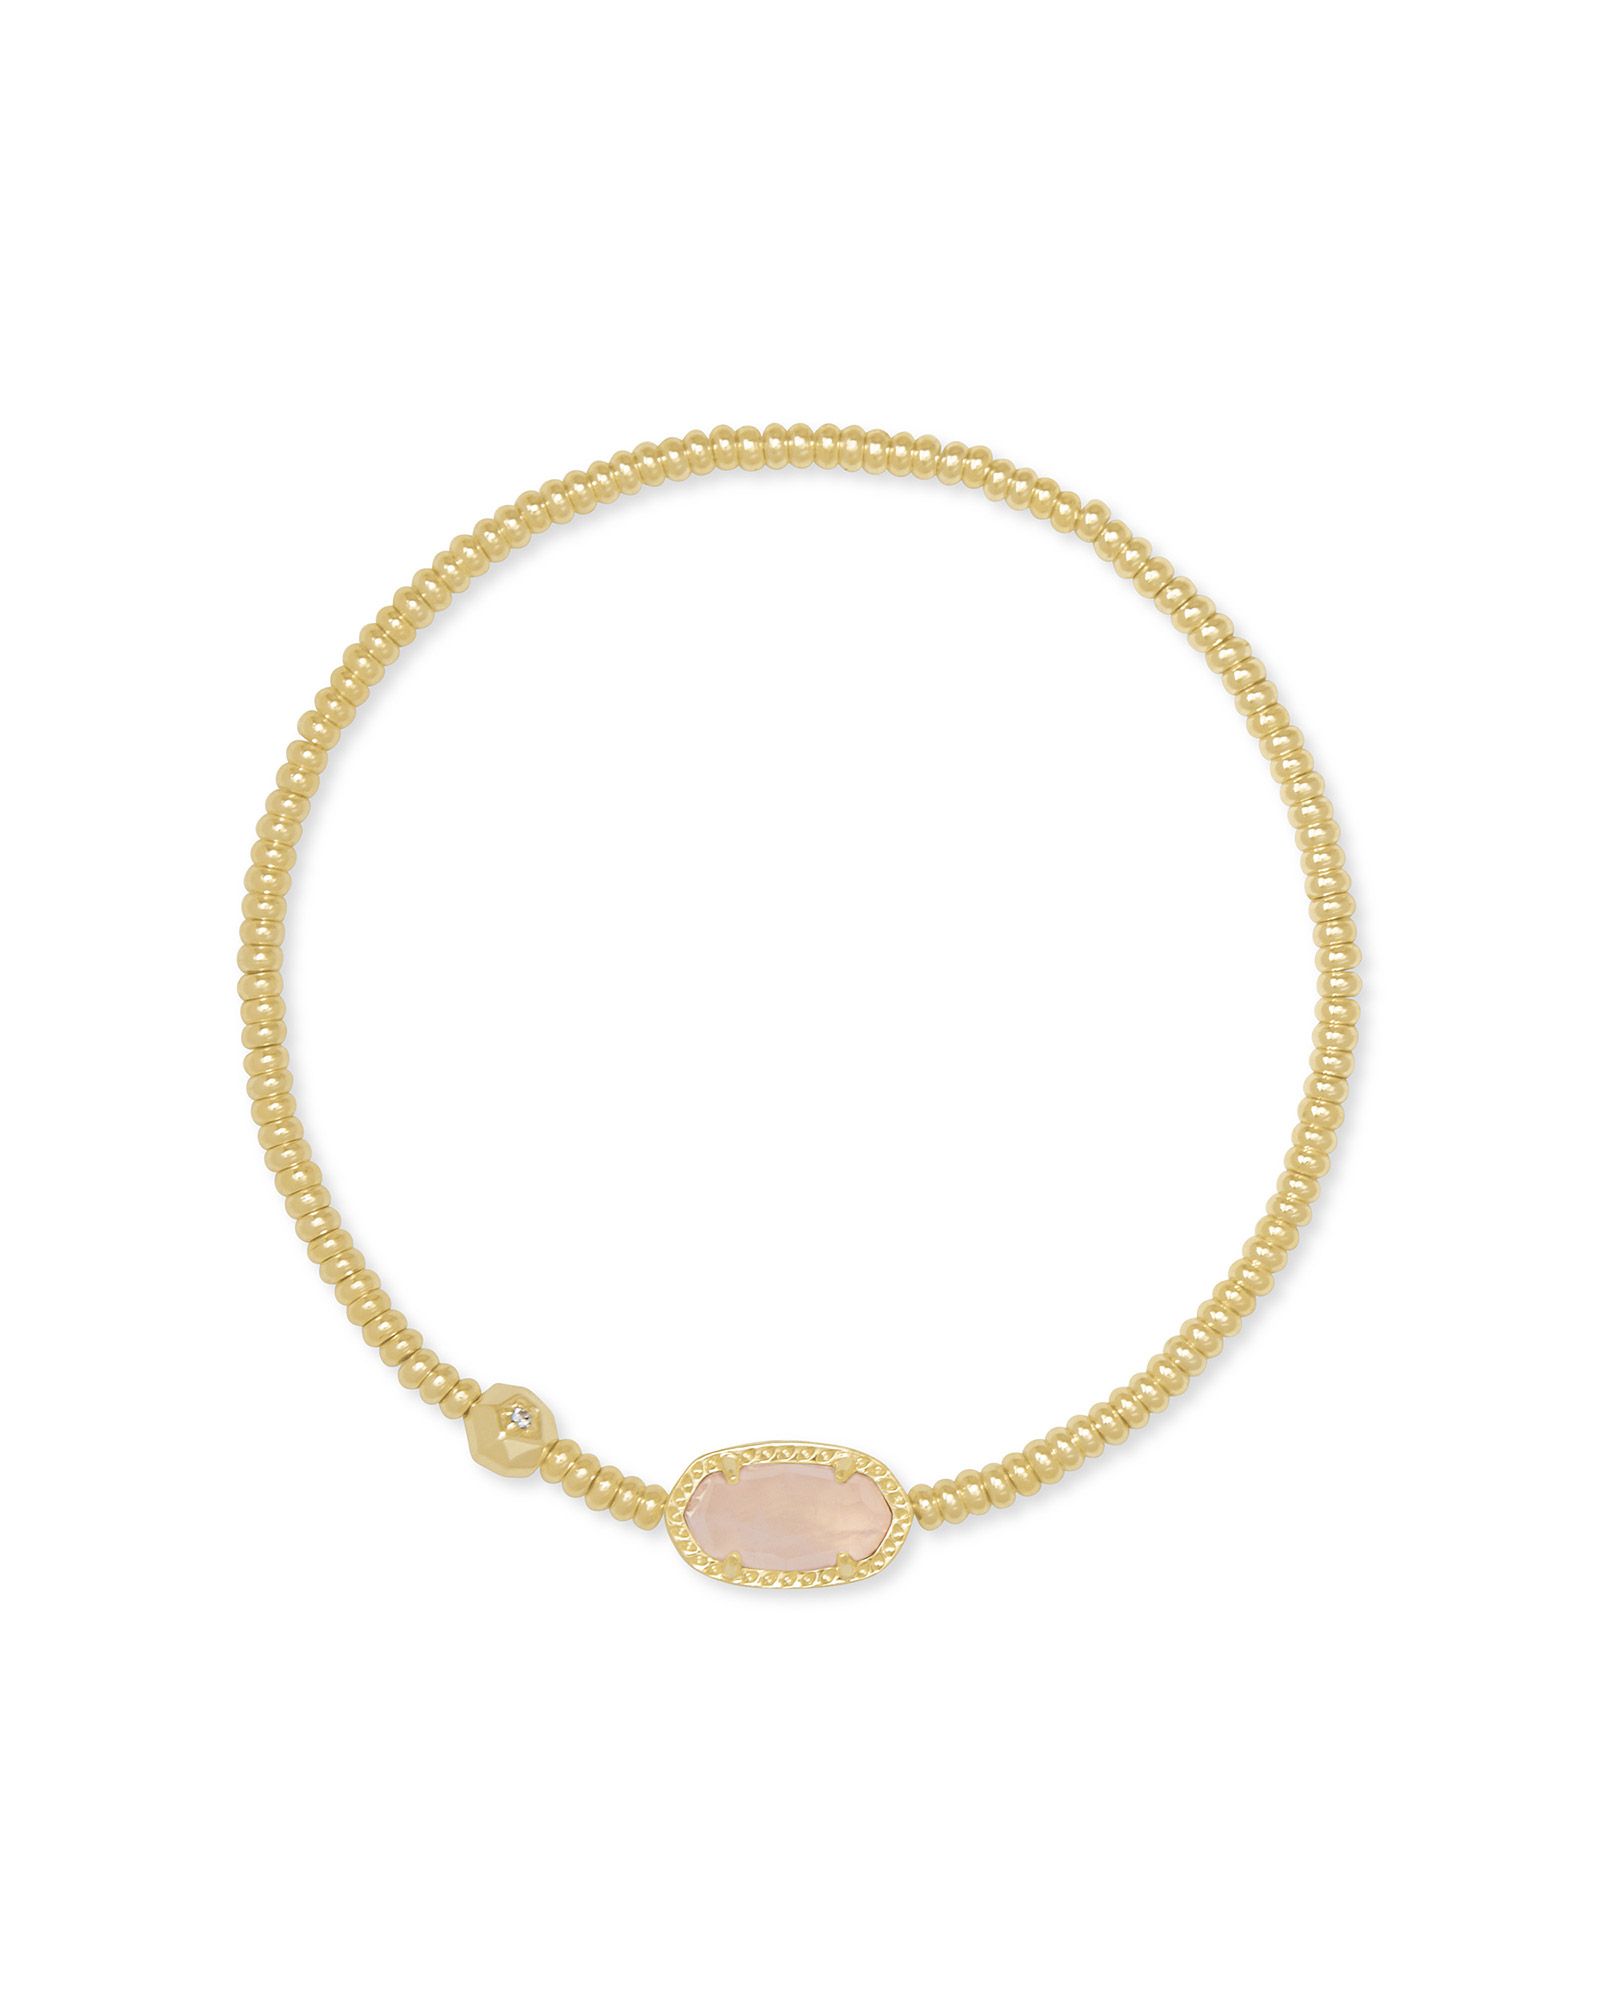 Grayson Gold Stretch Bracelet in Rose Quartz | Kendra Scott